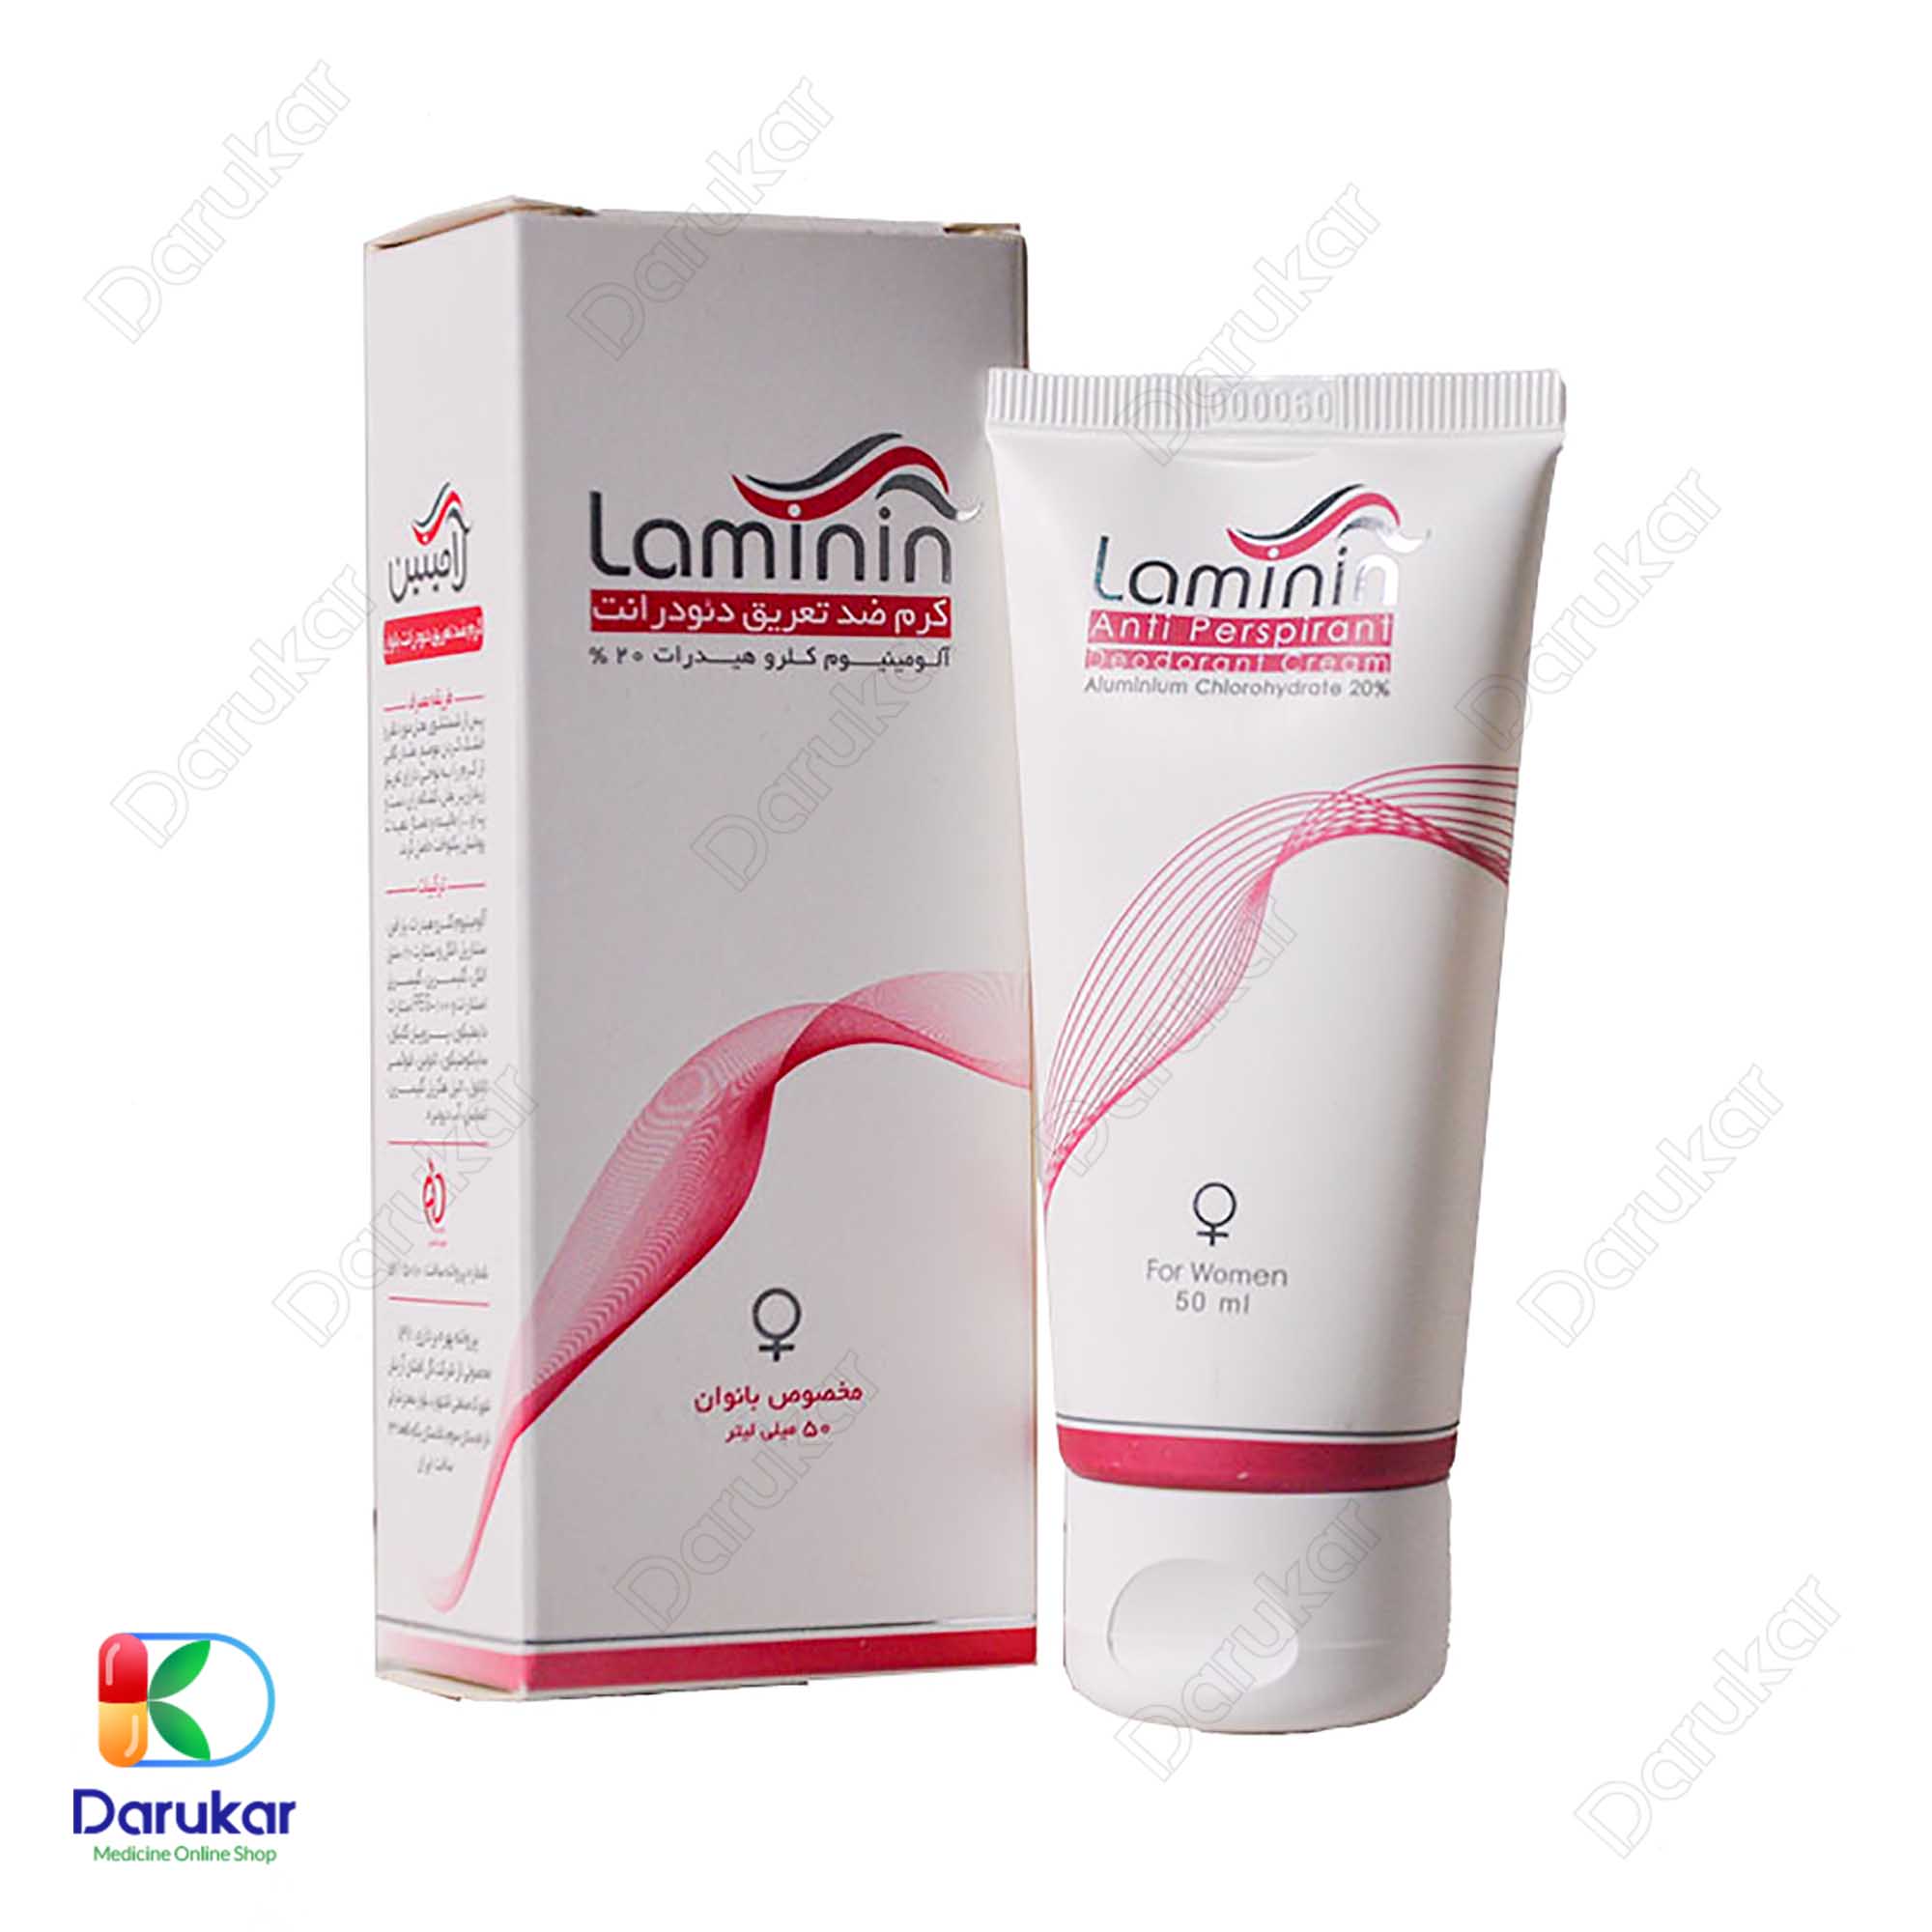 Laminin Deodorant Cream For Women 50 ml 1